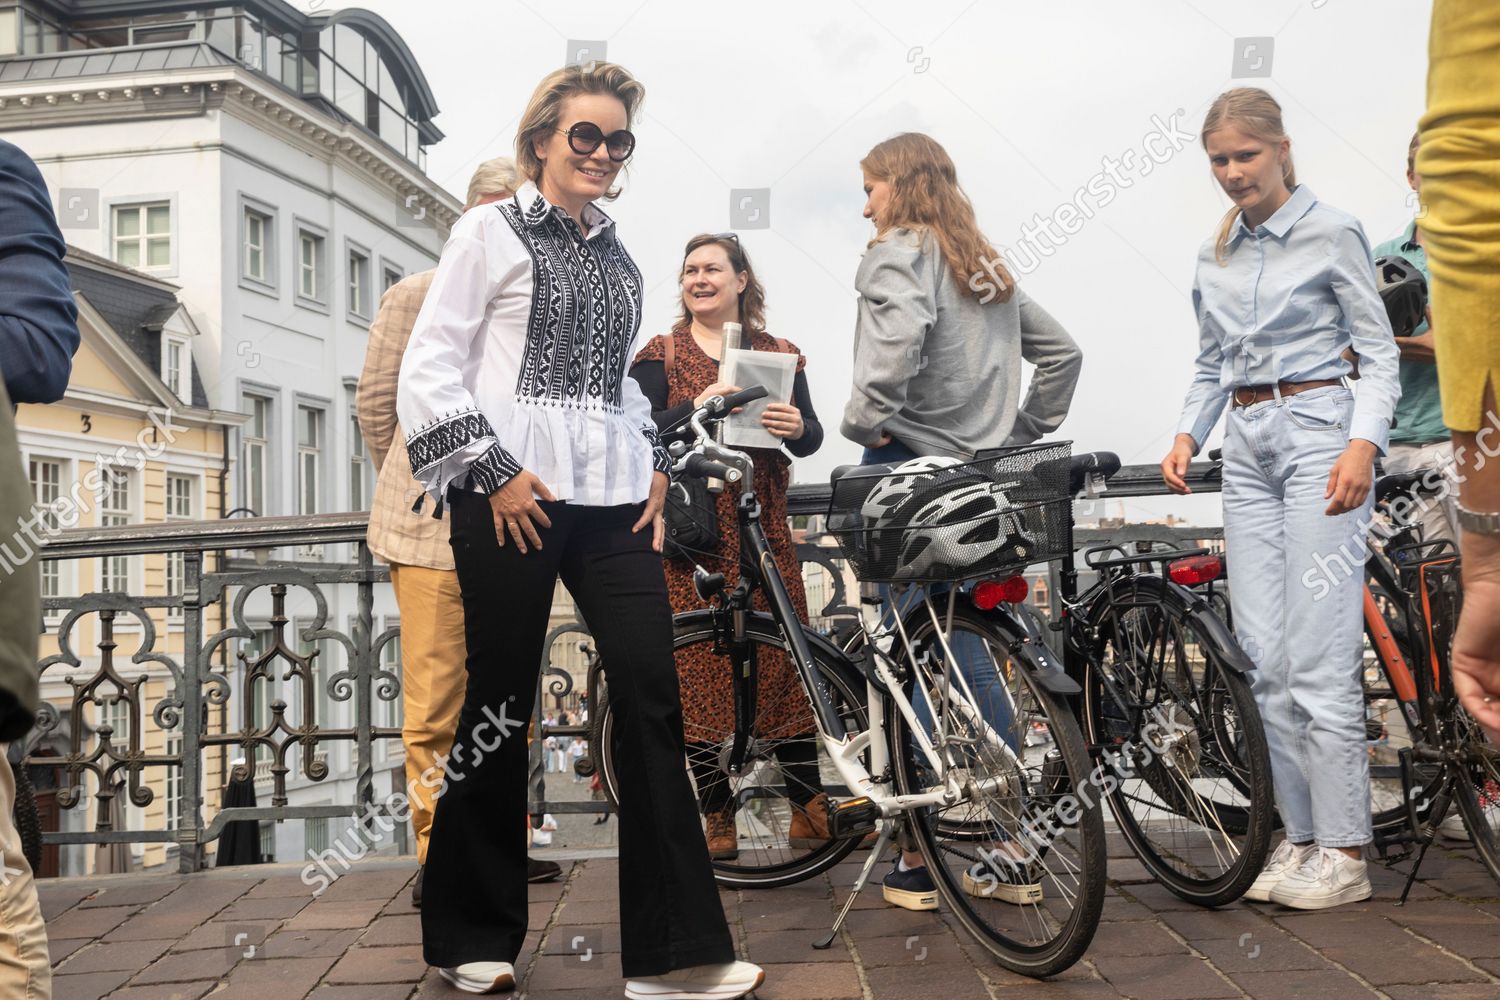 gent-sunday-car-free-royal-family-bike-gent-belgium-shutterstock-editorial-12451603d.jpg